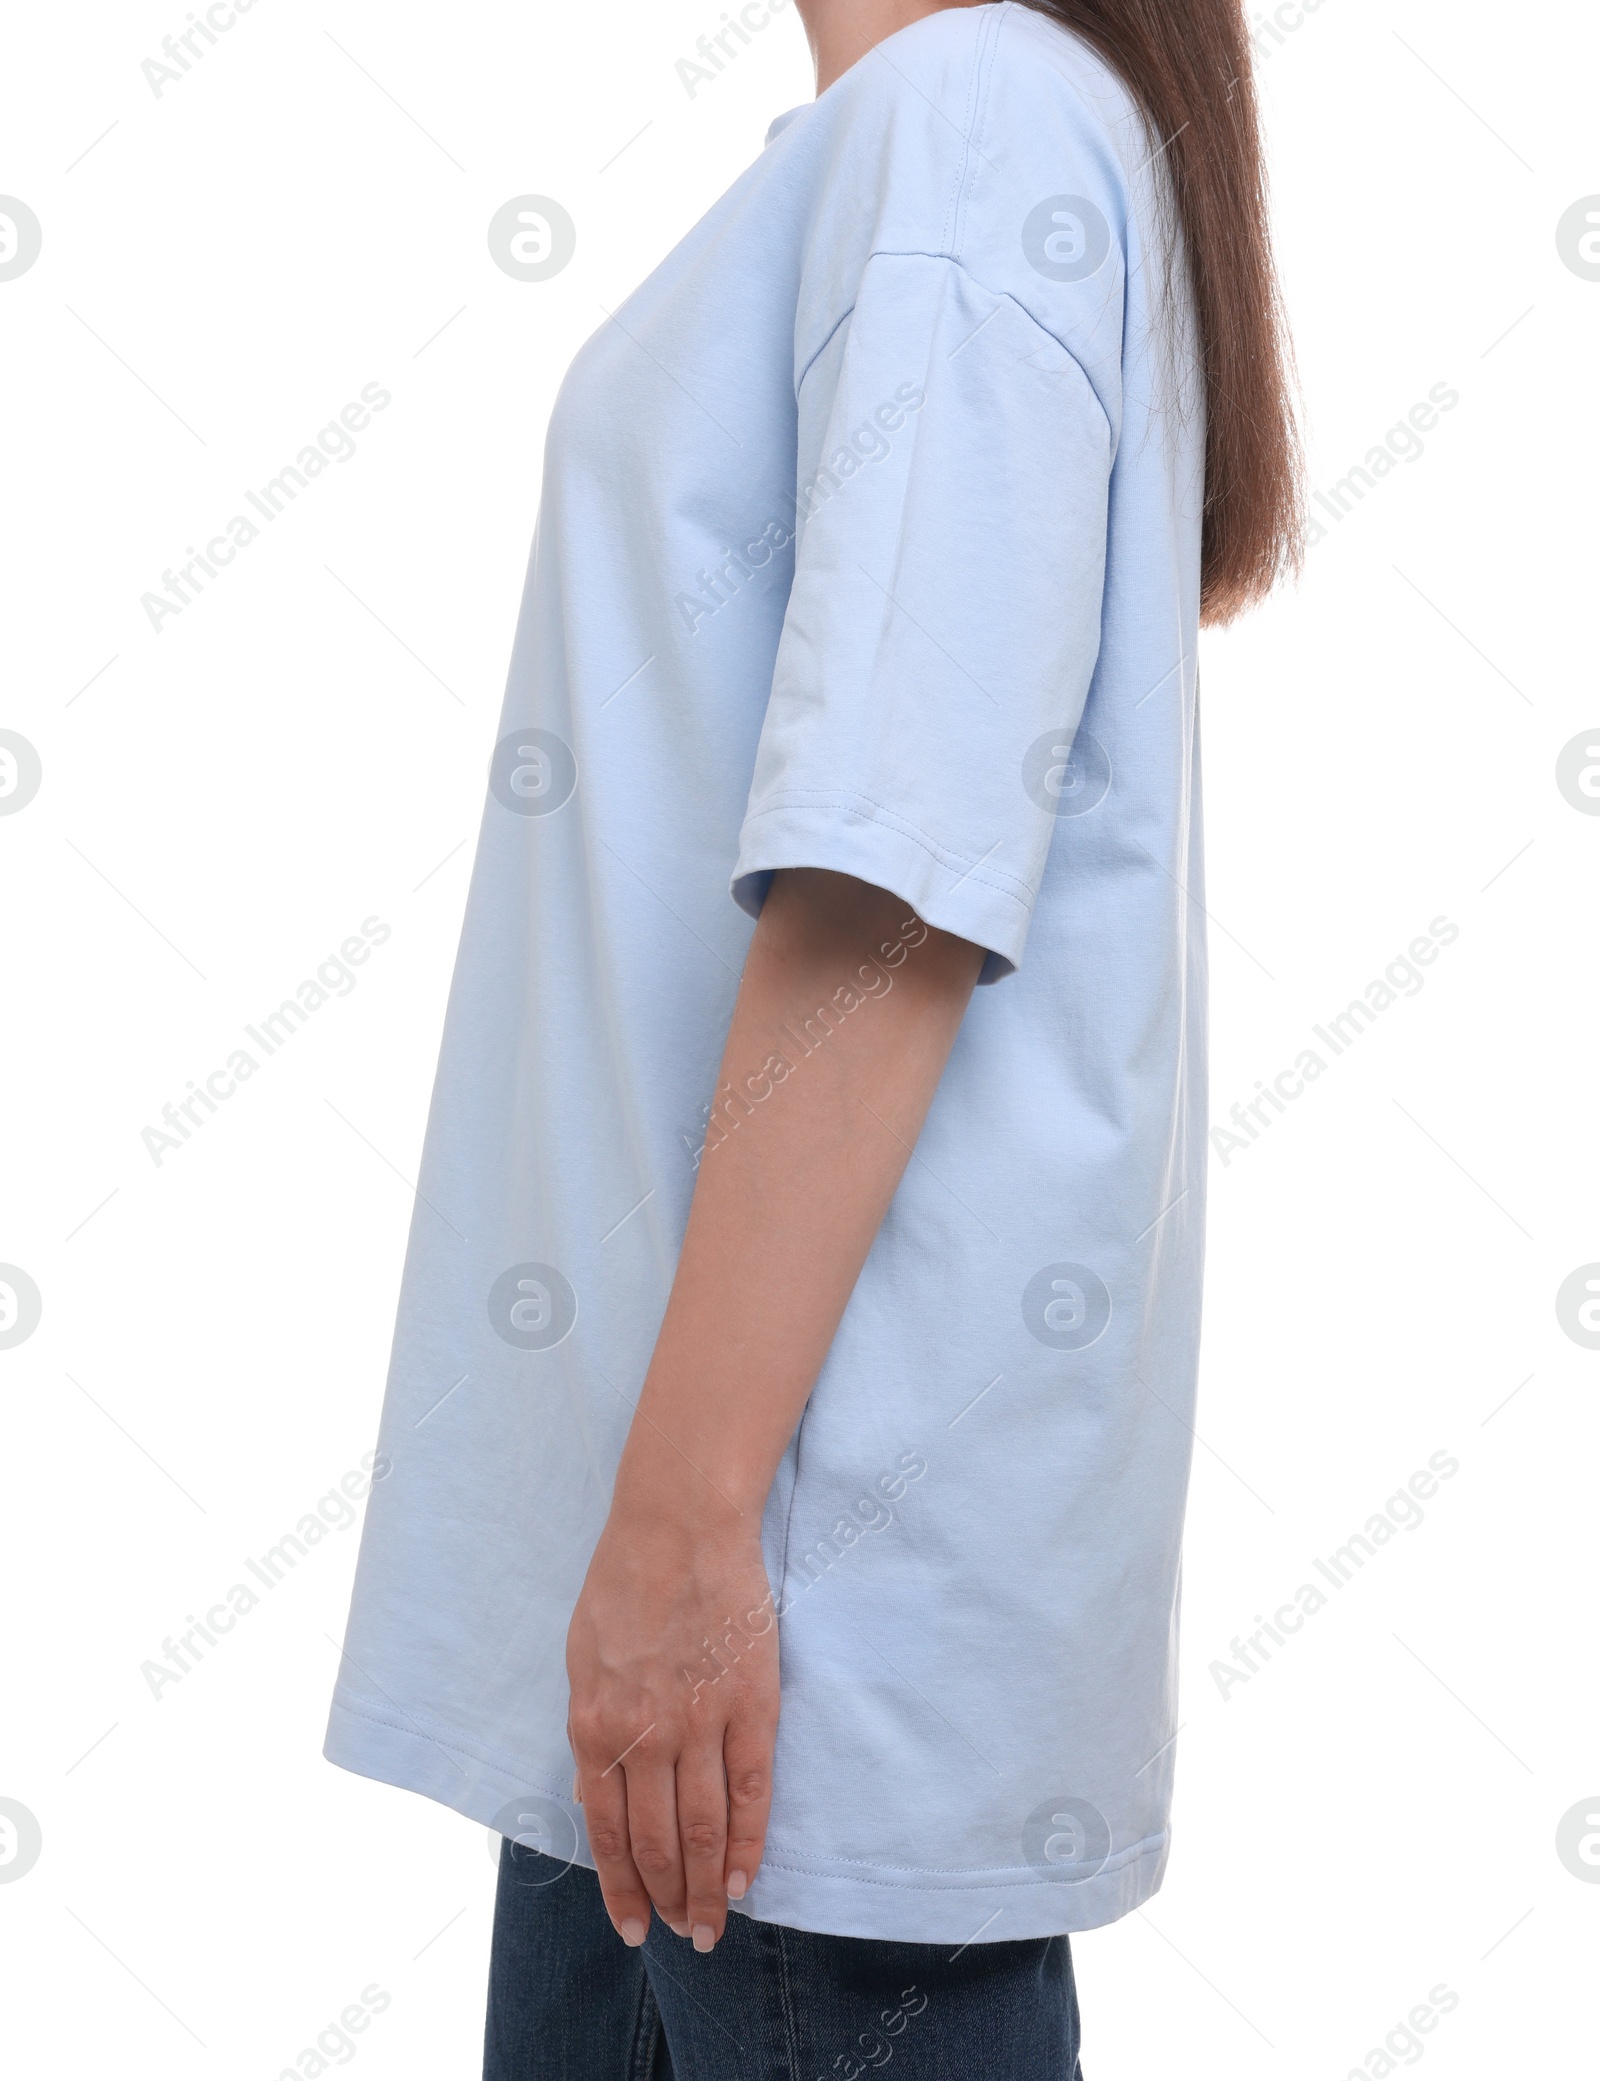 Photo of Woman in stylish light blue t-shirt on white background, closeup